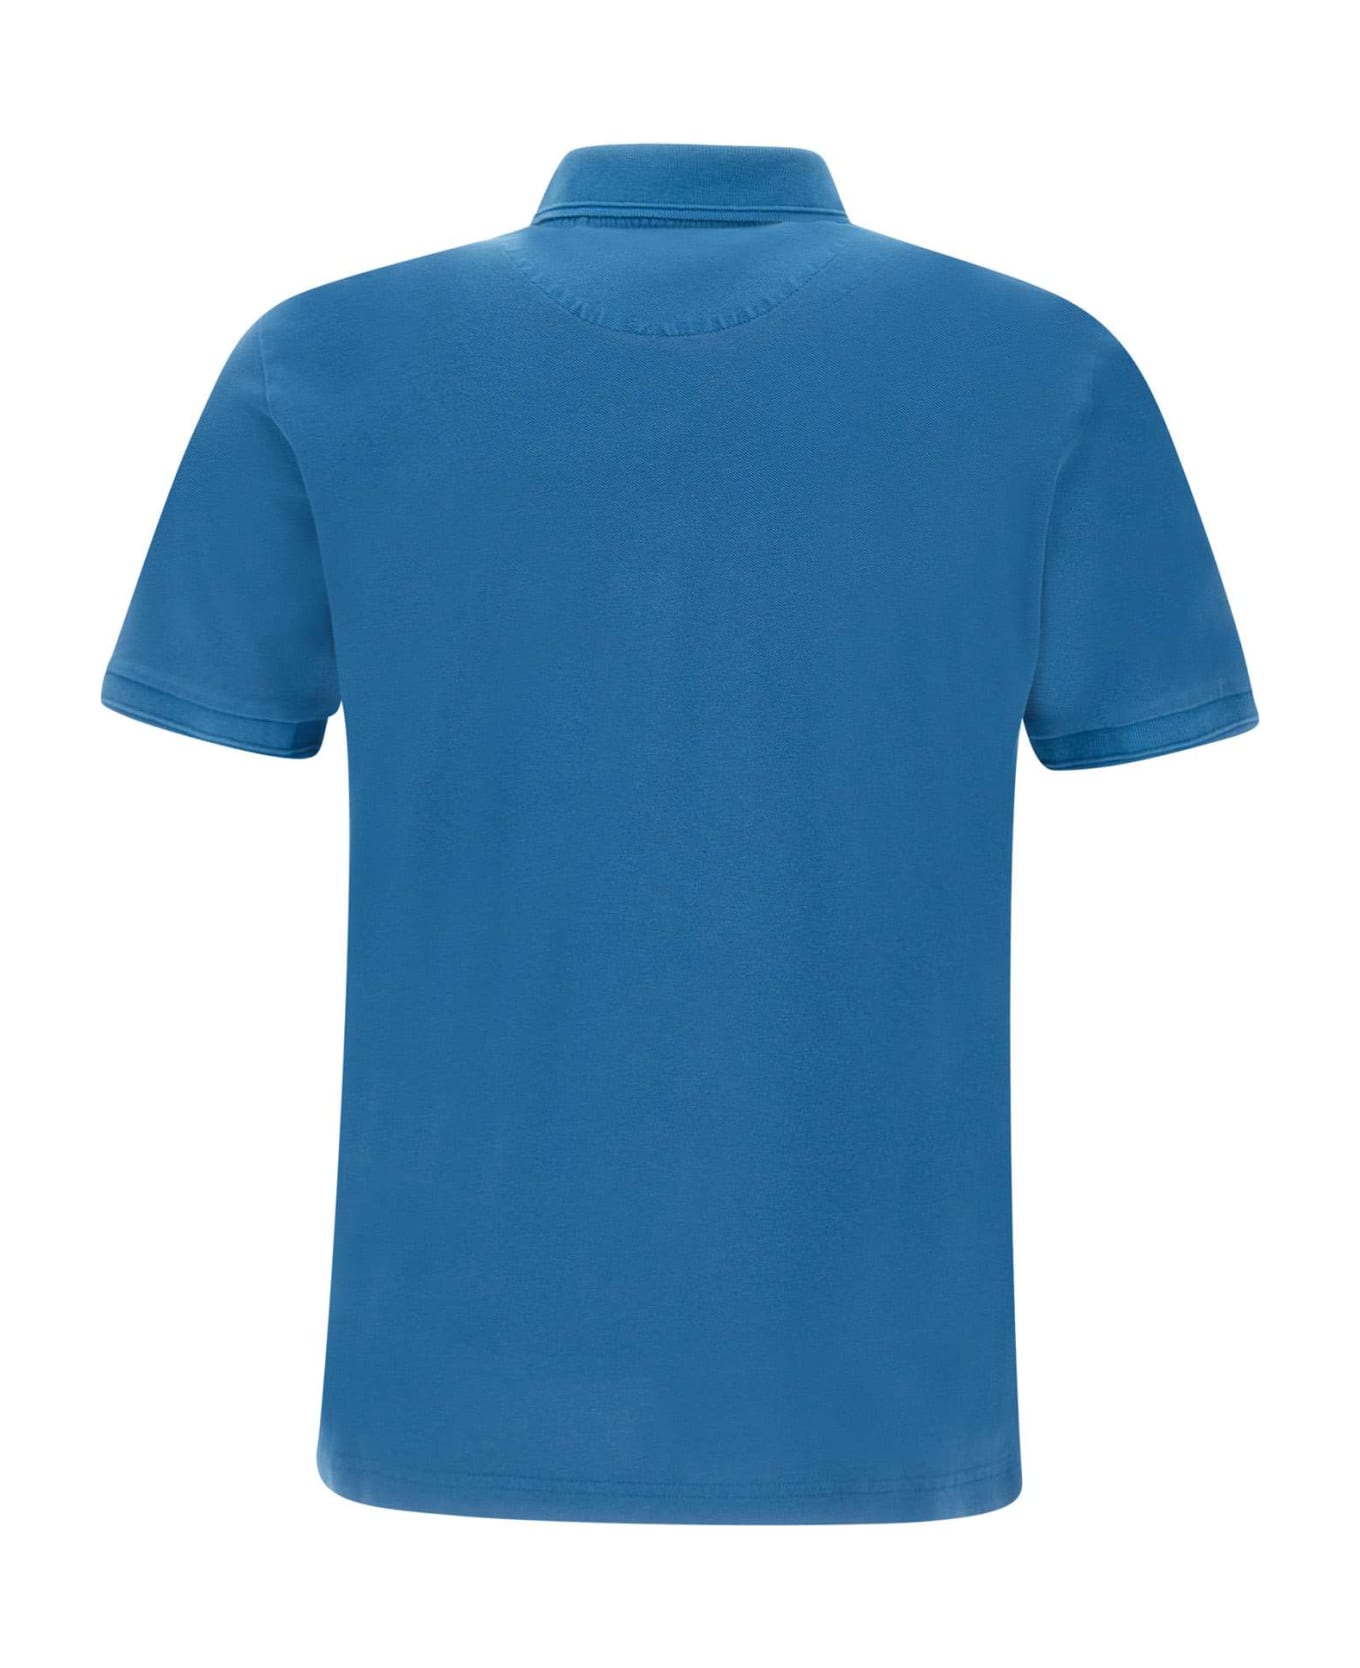 Woolrich 'mackinack' Cotton Piquet Polo Shirt - BLUE